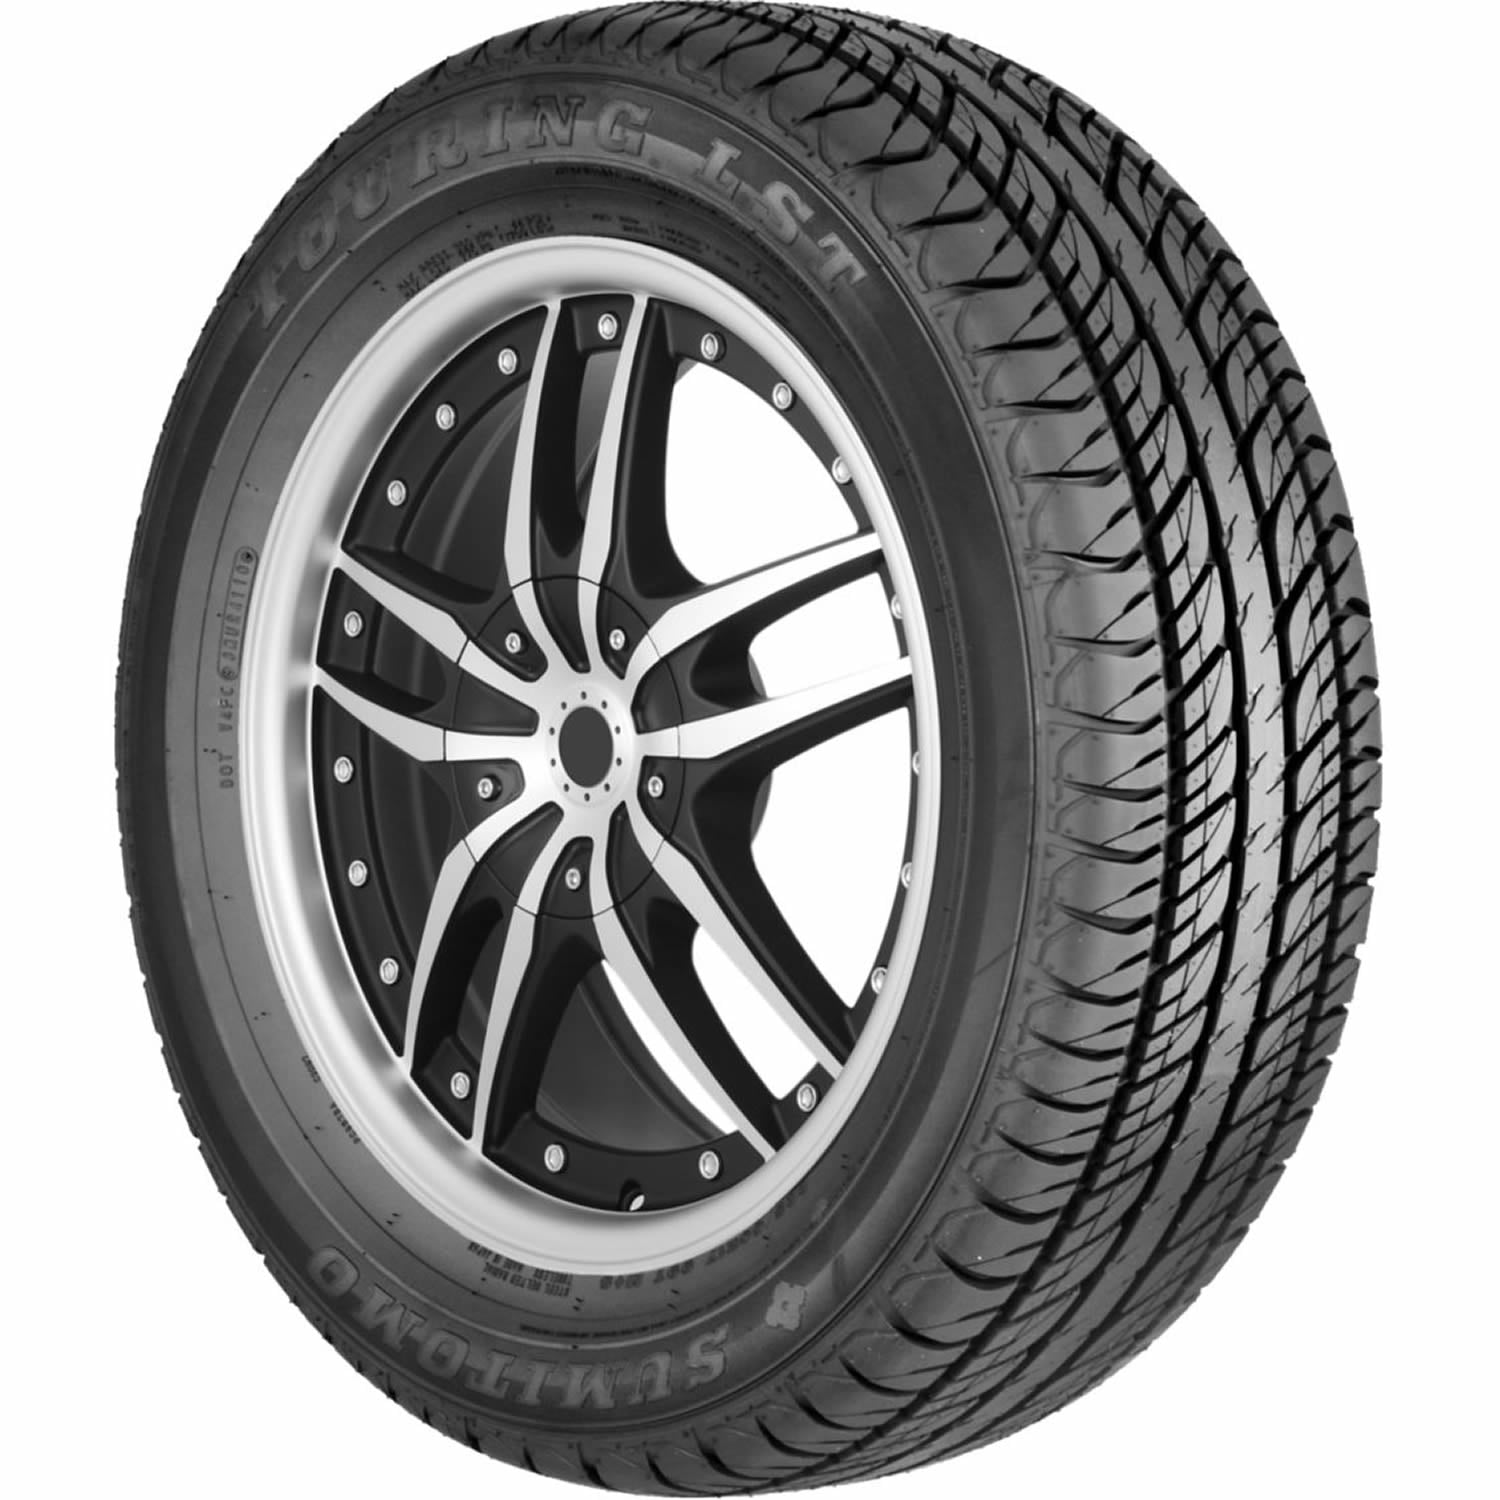 SUMITOMO TOURING LS 195/65R15 (25.1X7.7R 15) Tires